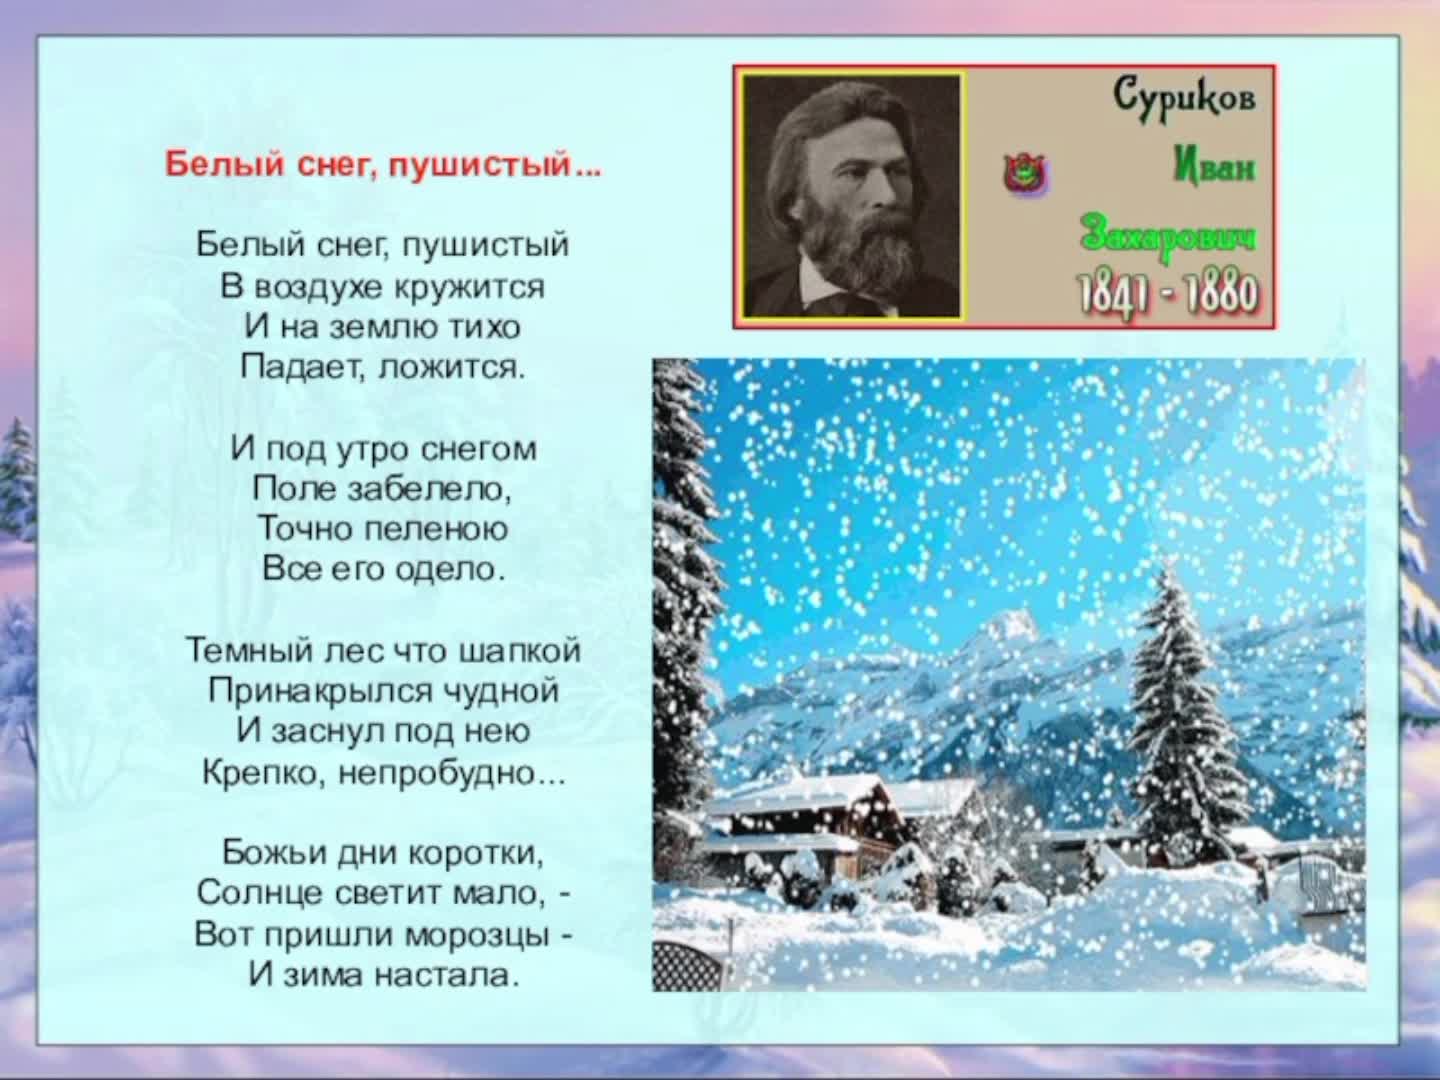 Зимнее стихотворение отрывки. Стих Ивана Захаровича Сурикова зима.